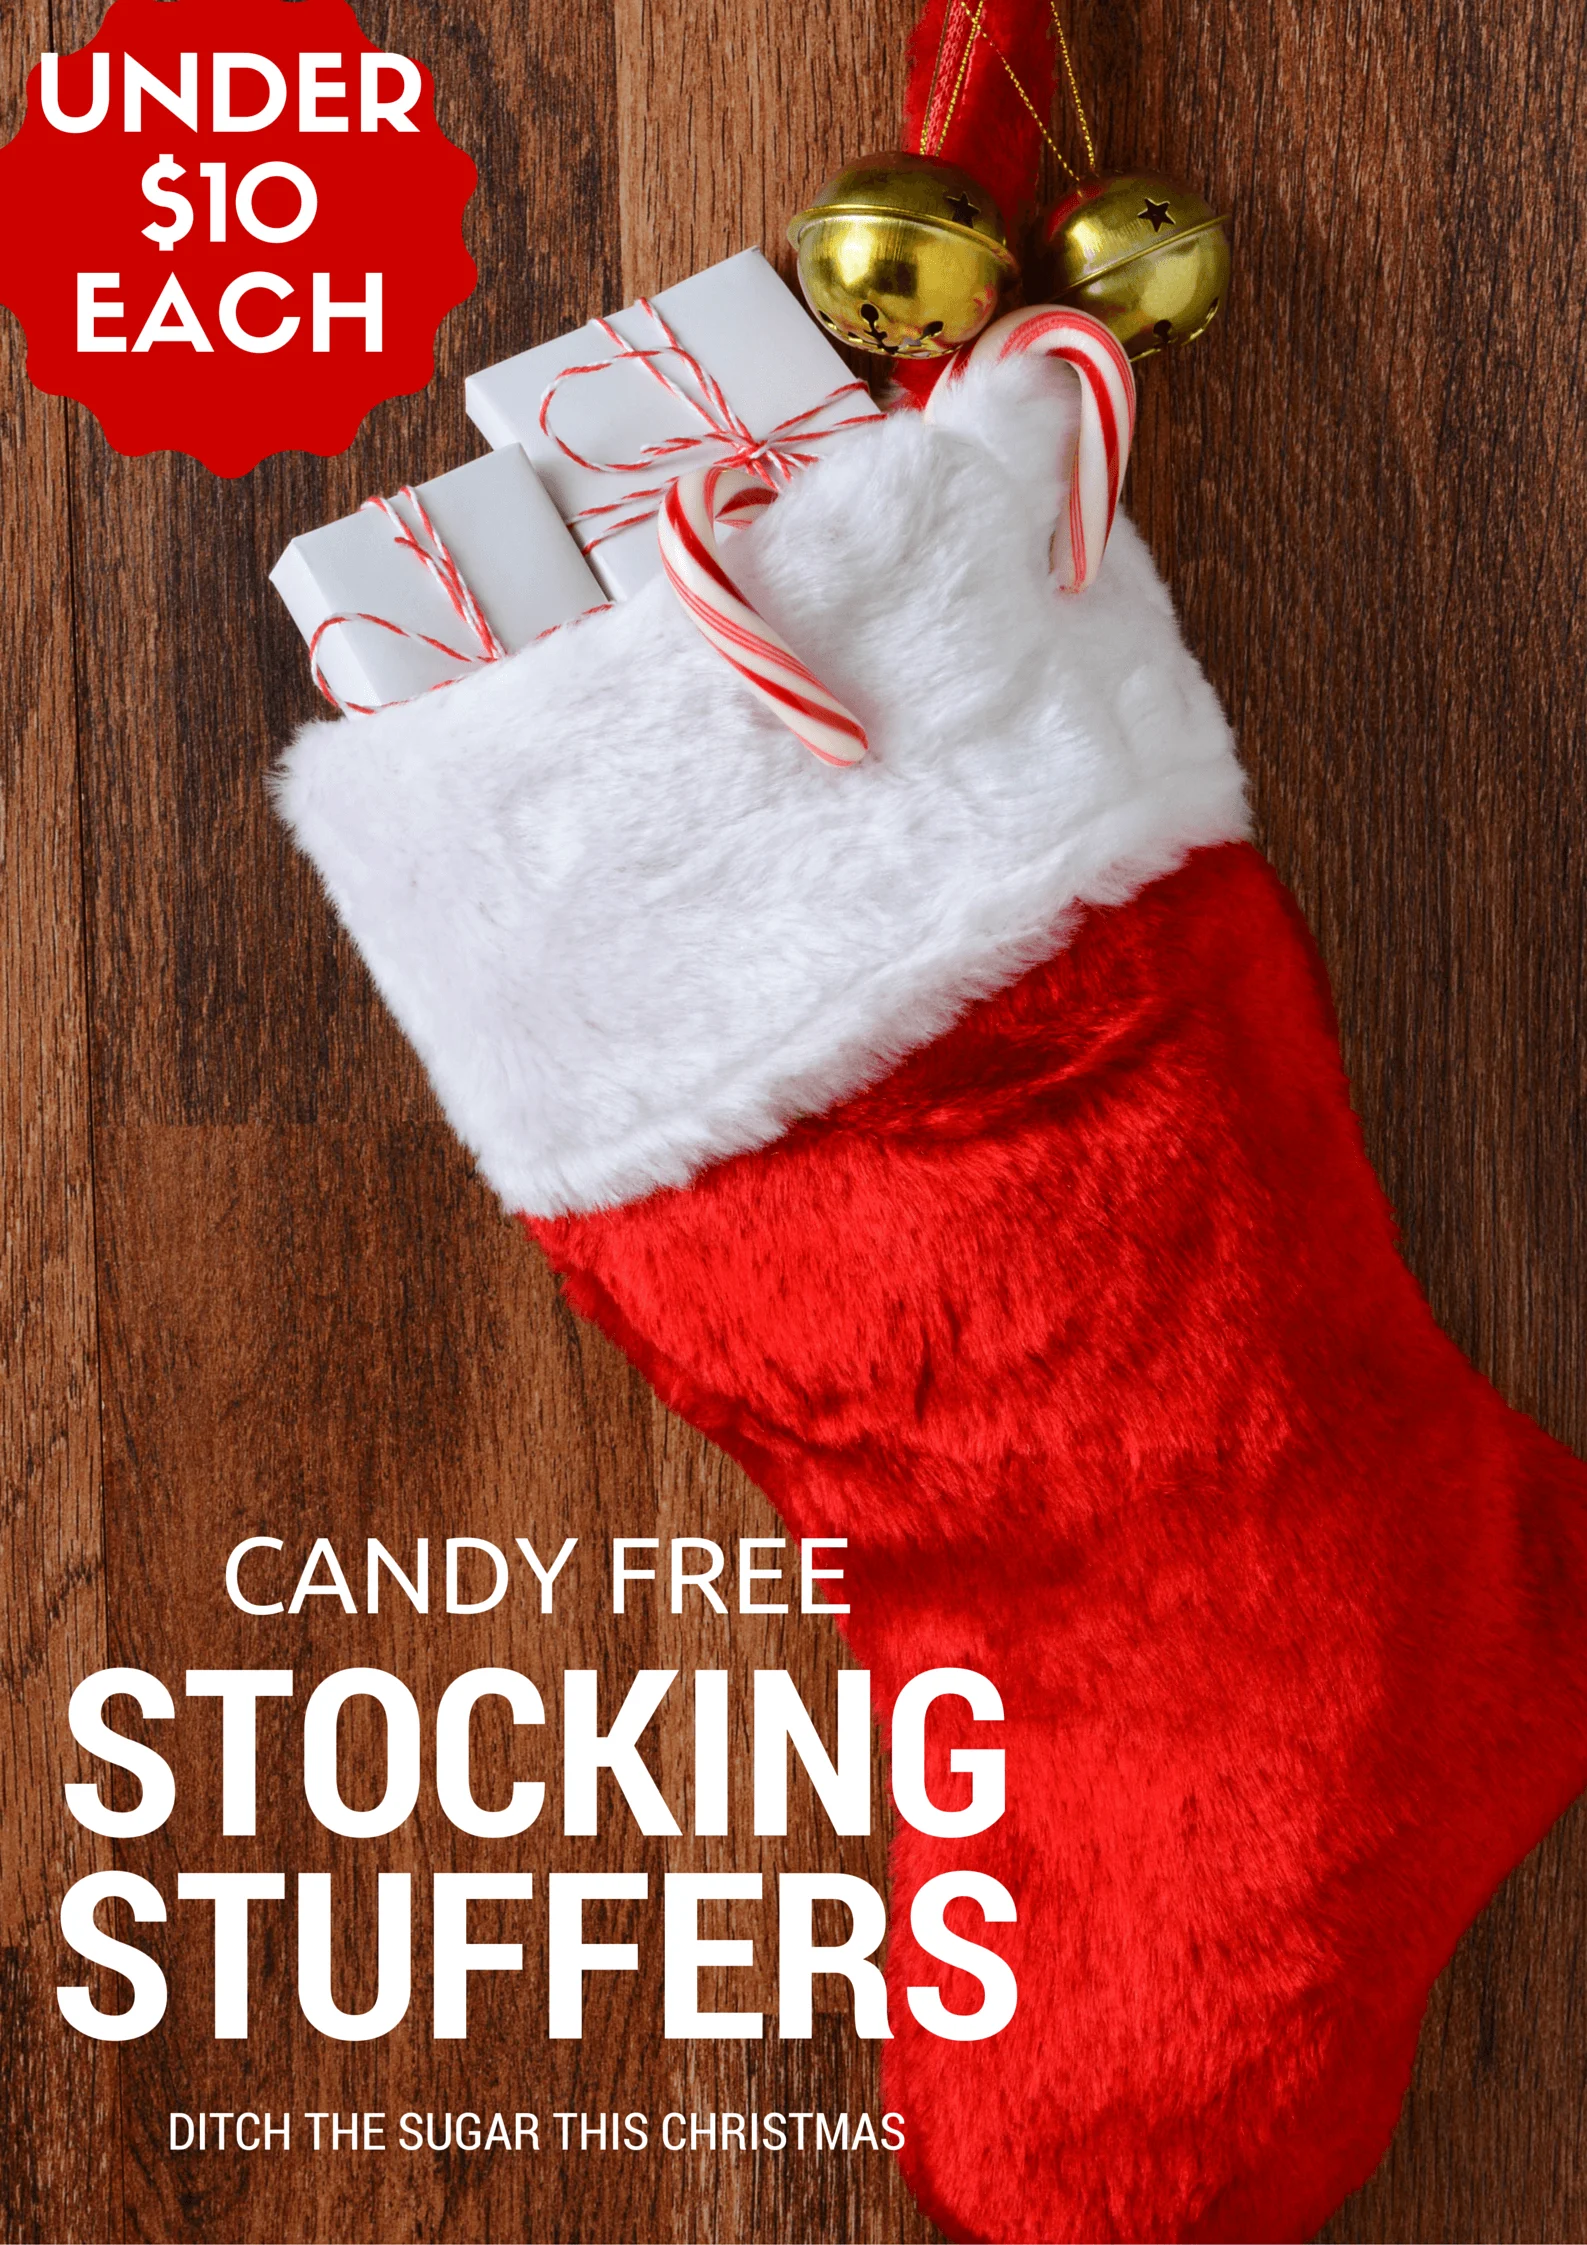 The 43 best stocking stuffer ideas for kids